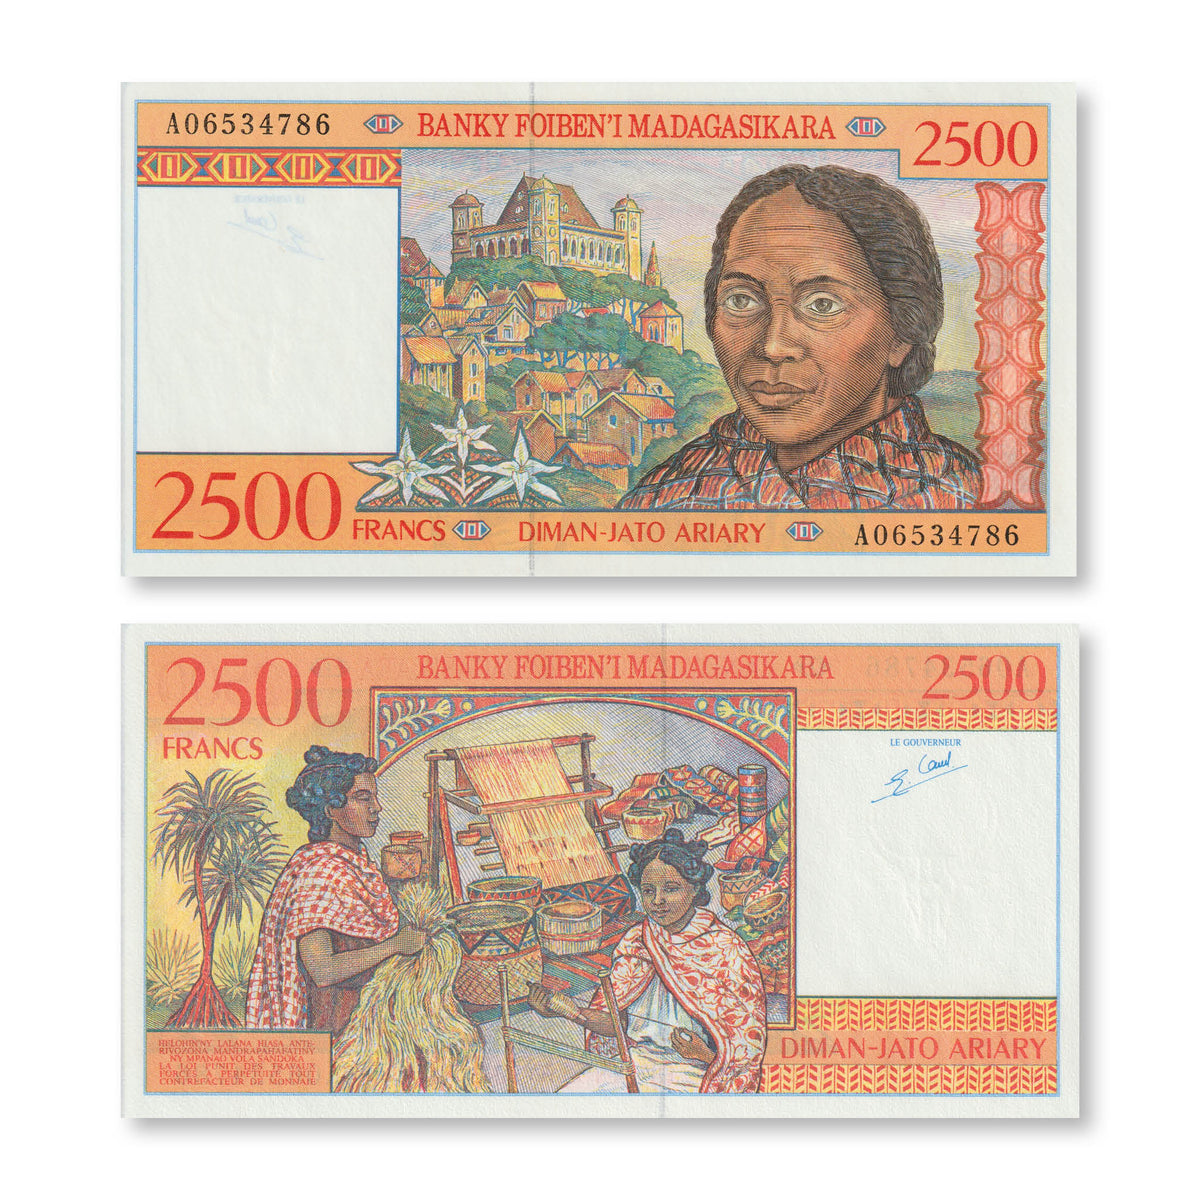 Madagascar 2500 Francs, 1998, B313a, P81, UNC - Robert's World Money - World Banknotes